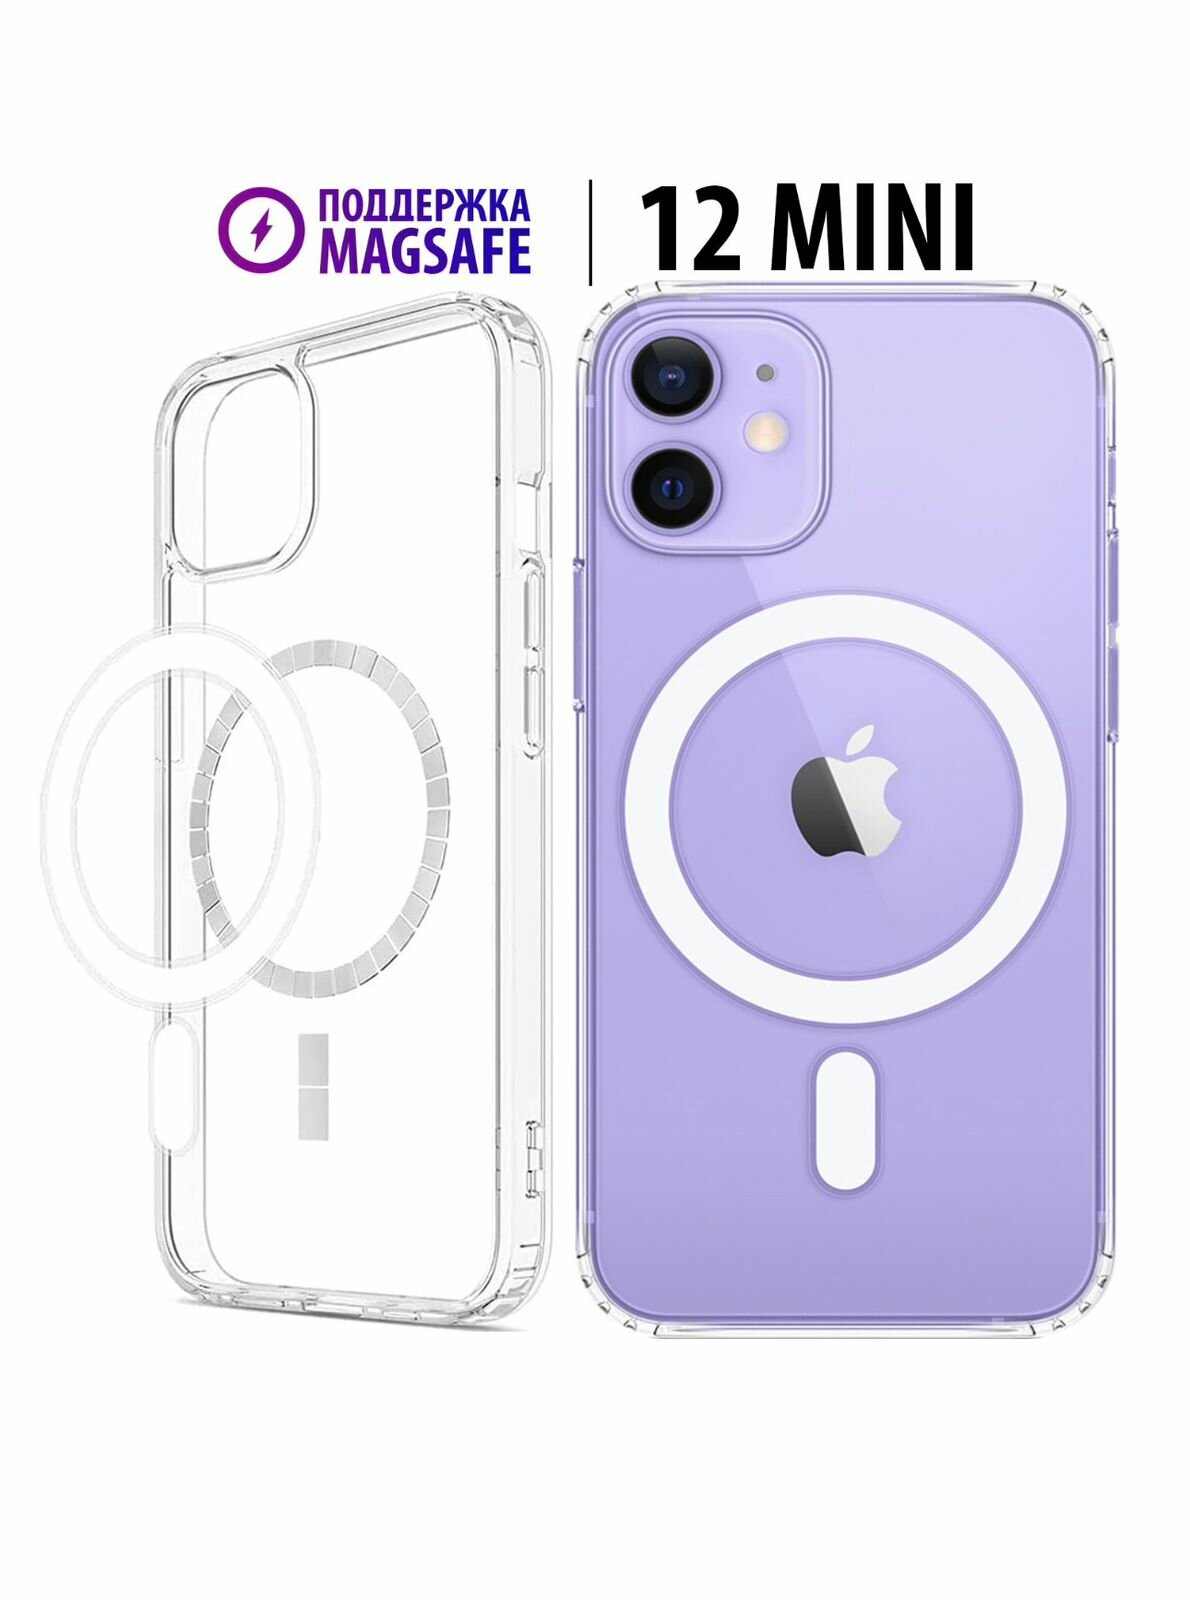 Чехол для Iphone 12 mini с magsafe